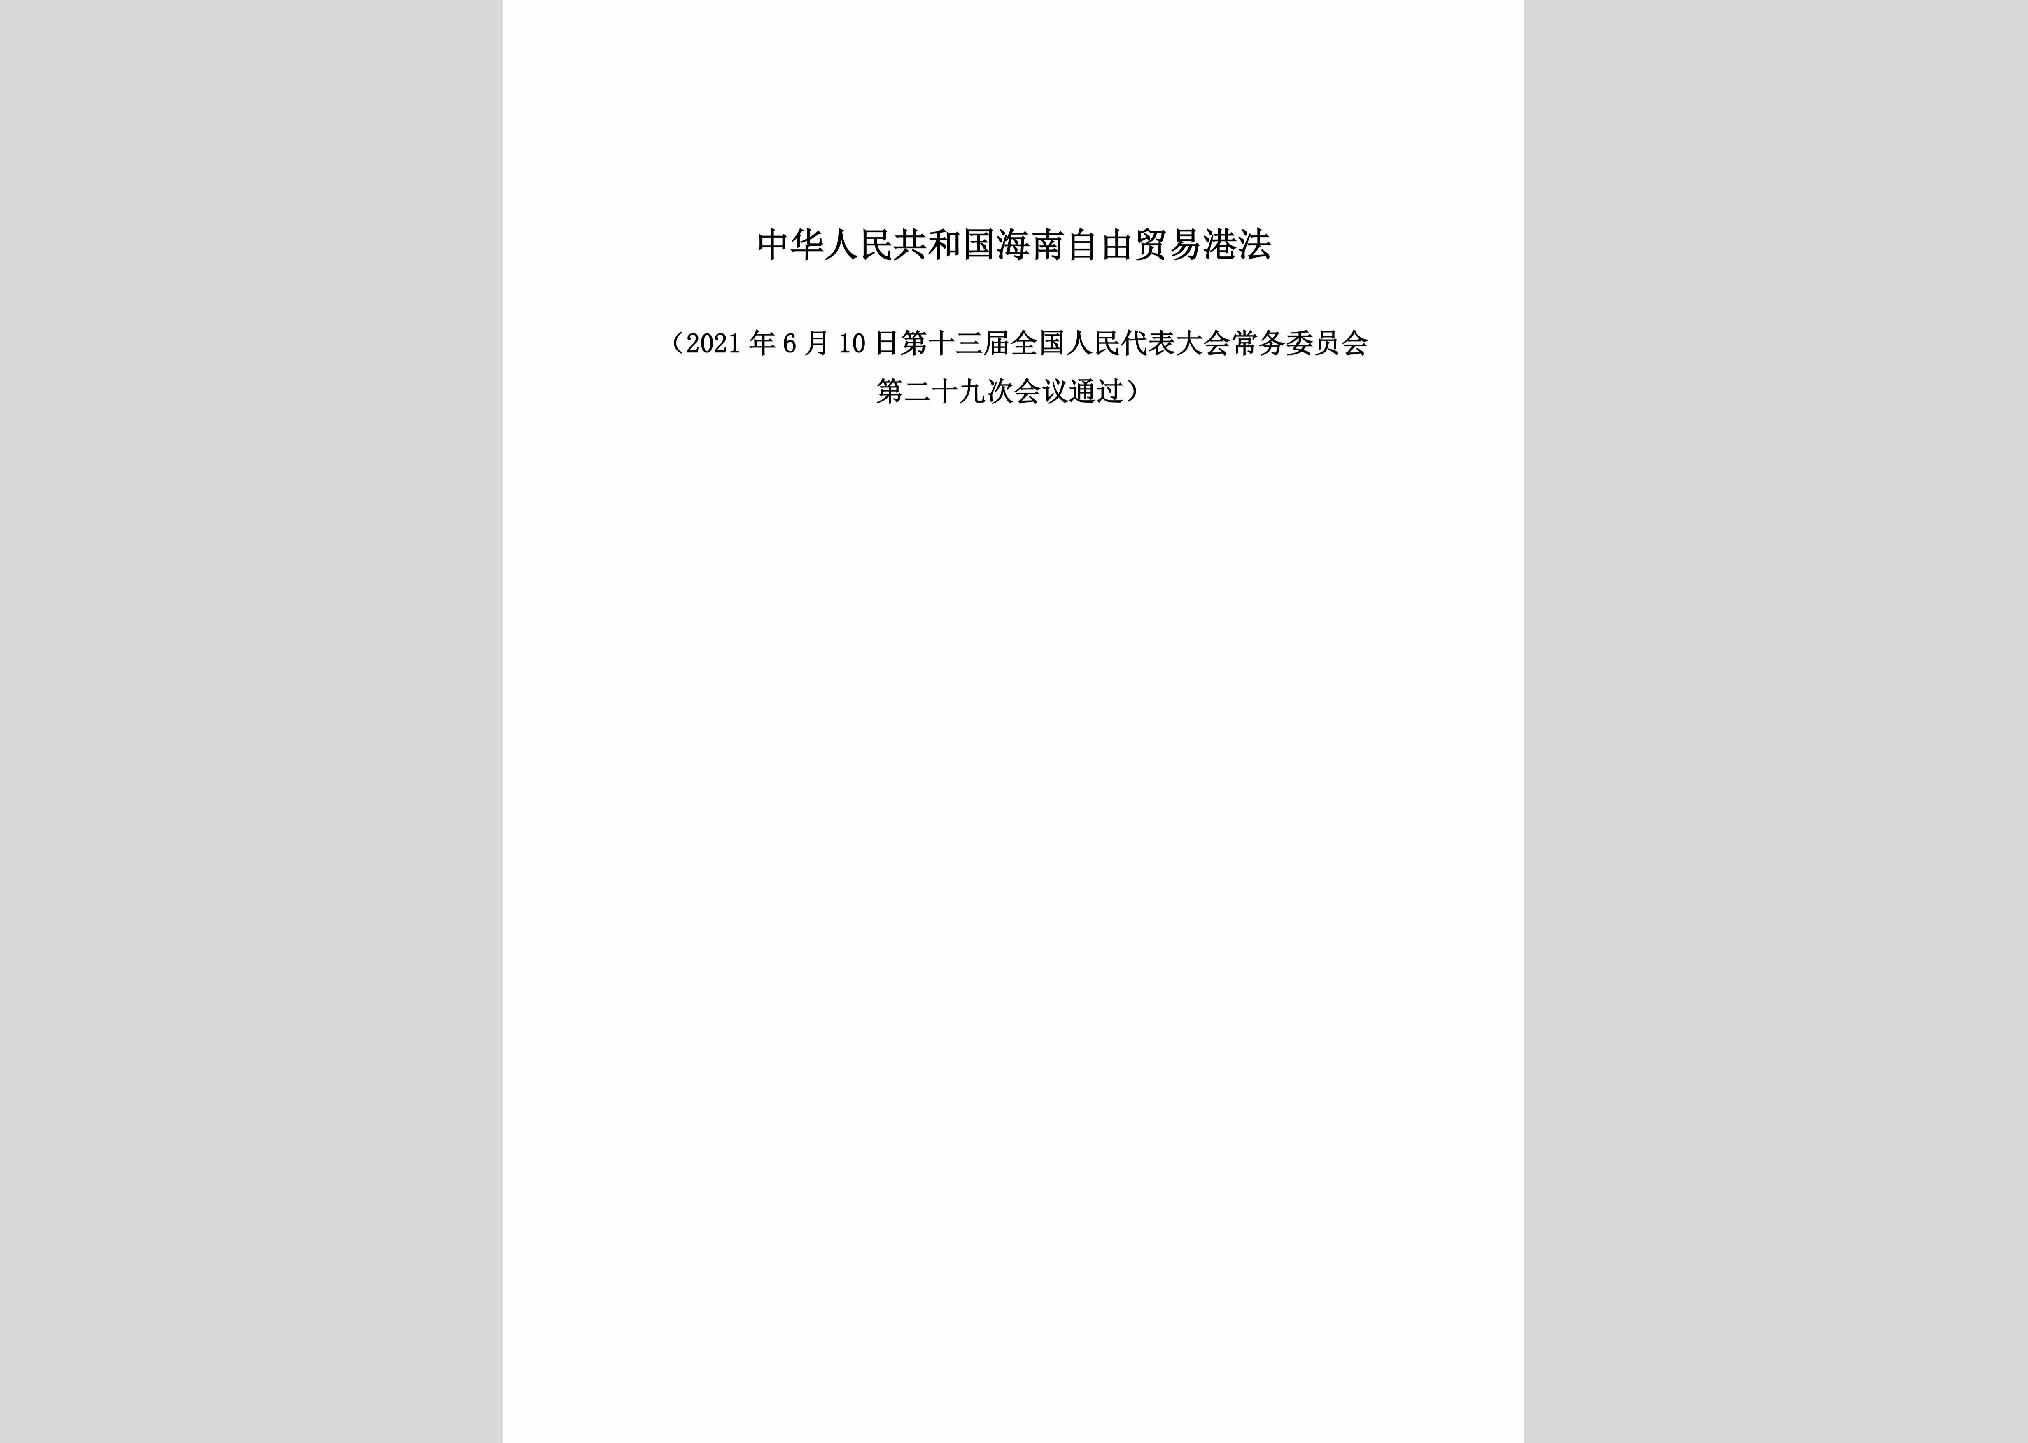 HNZYMYGF：中华人民共和国海南自由贸易港法